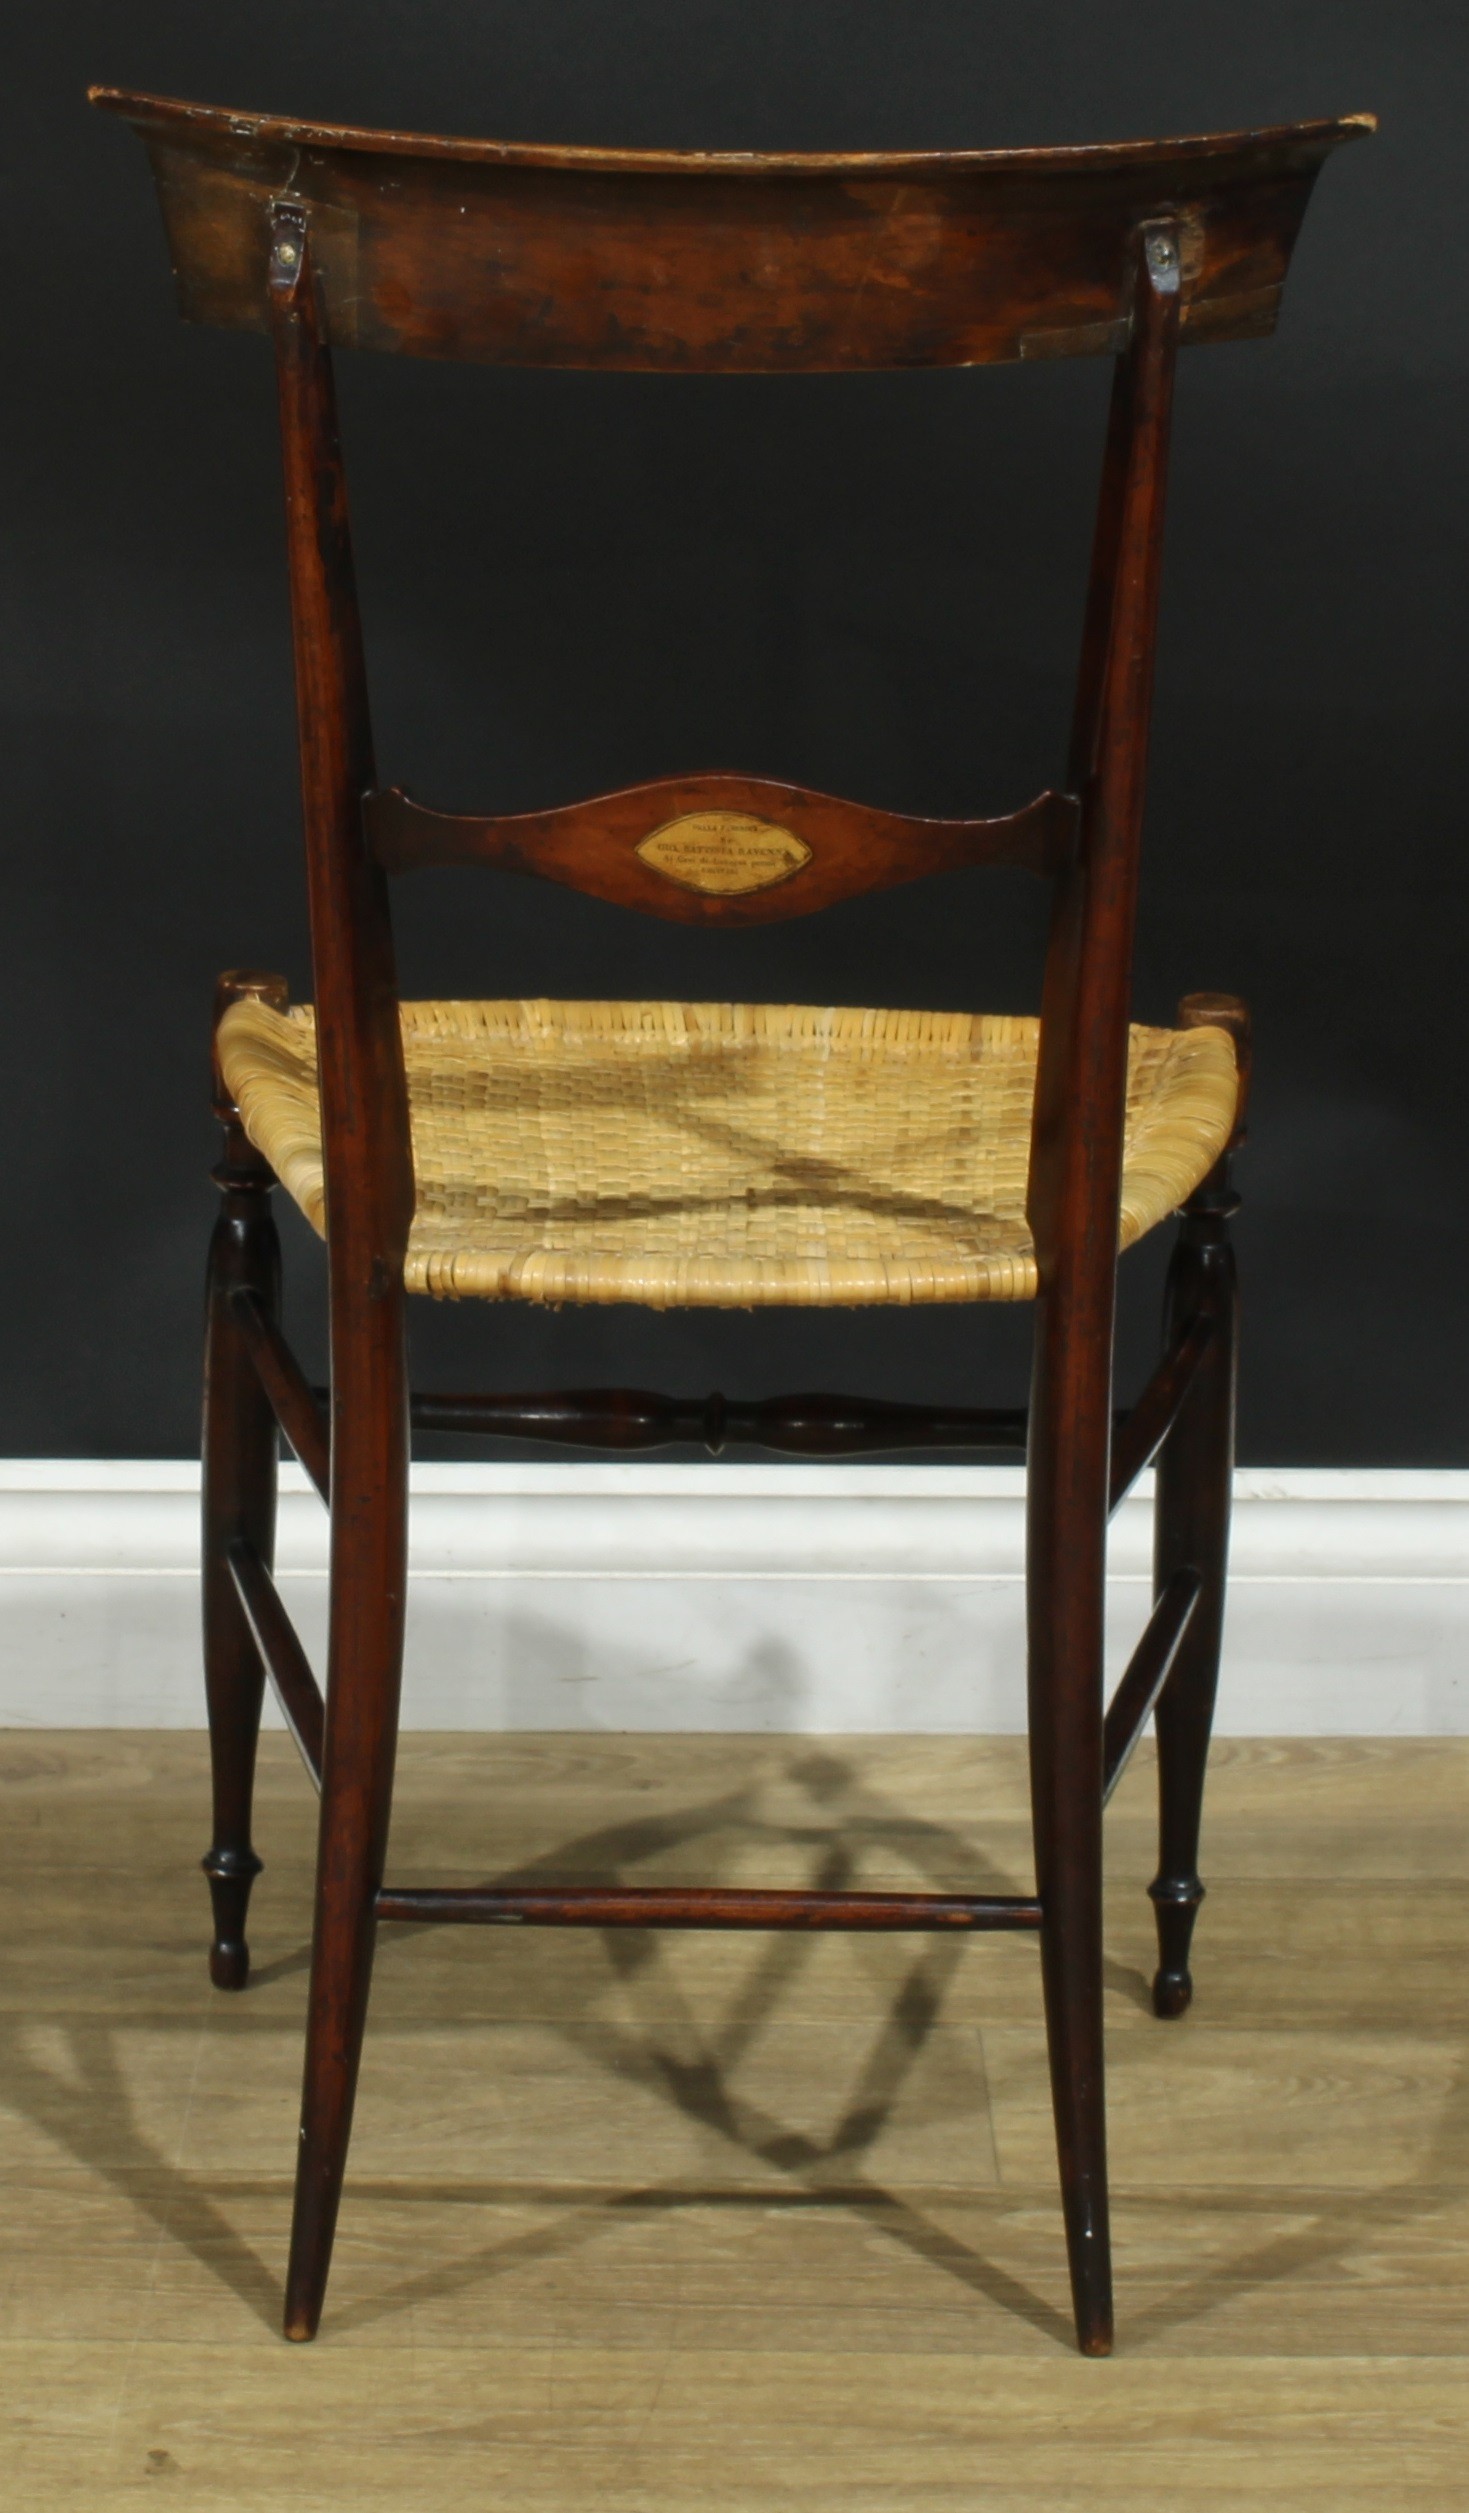 A 19th century Italian cherry Chiavari chair, designed by Giovanni Battista Ravenna, woven cane - Image 4 of 4